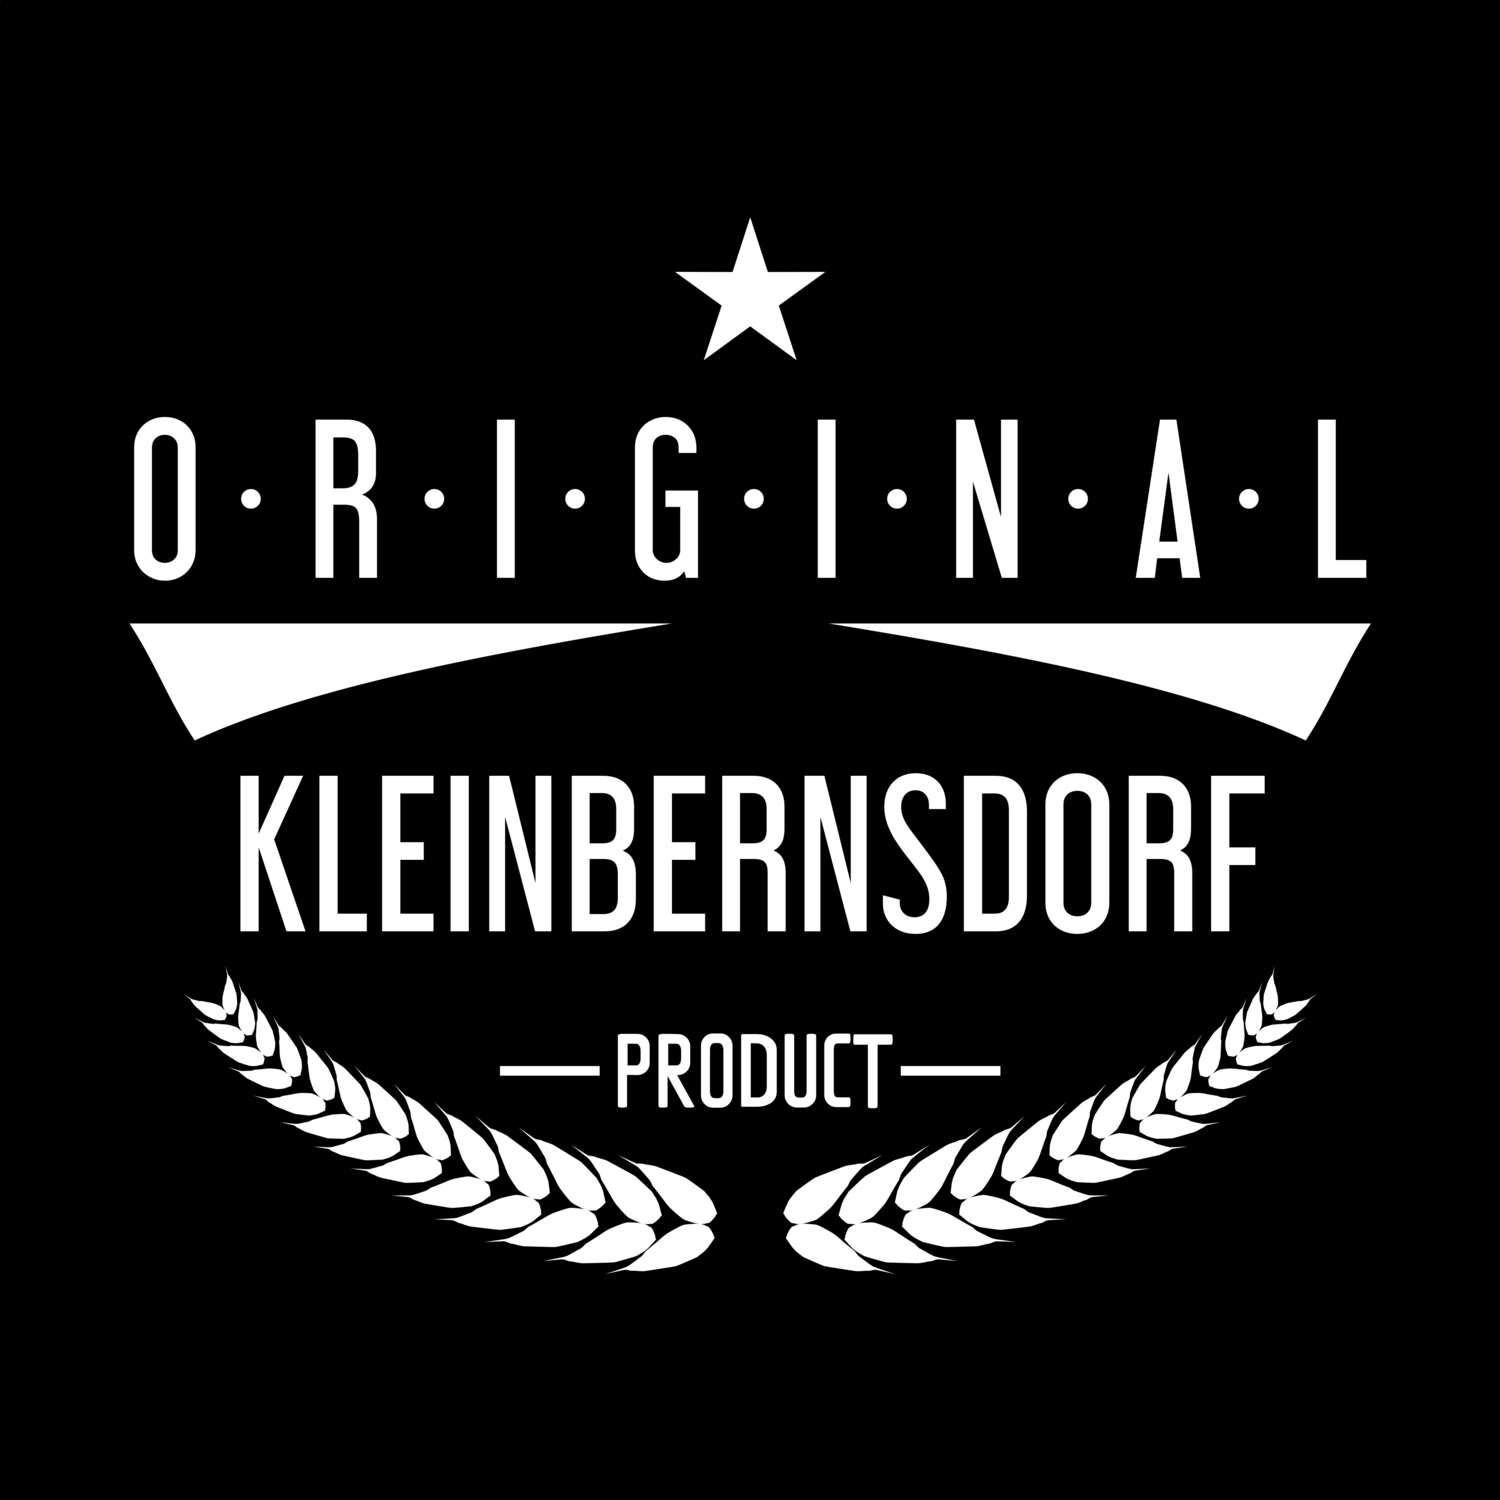 Kleinbernsdorf T-Shirt »Original Product«